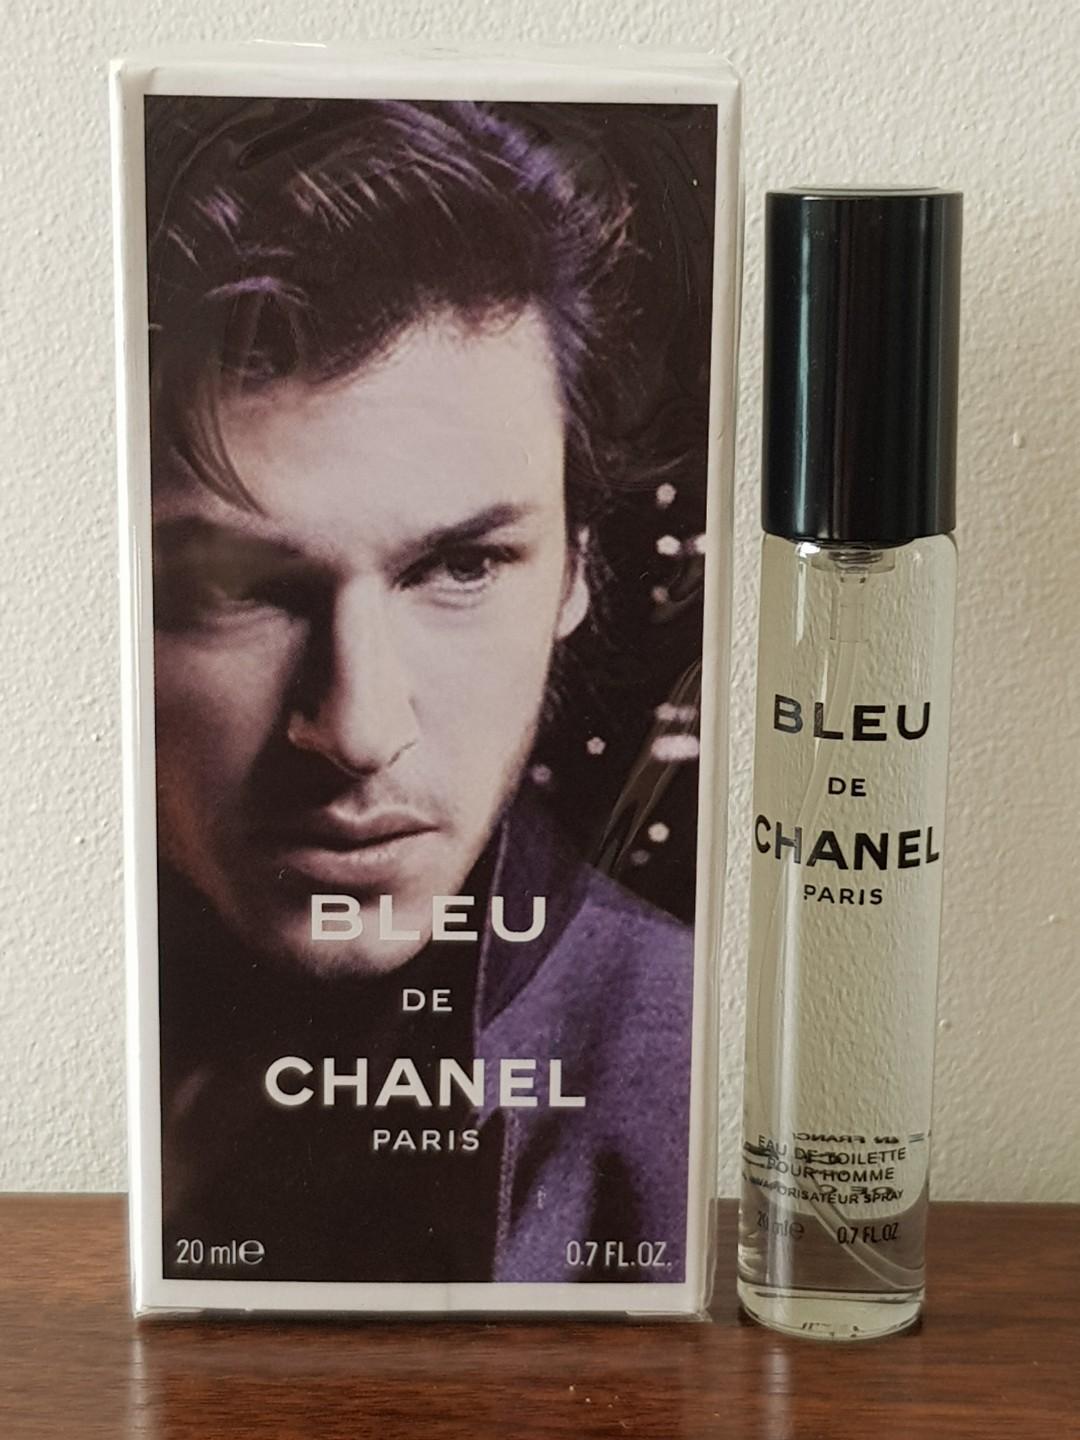 Bleu de Chanel Buying Guide - Which Bleu de Chanel Is Best For You